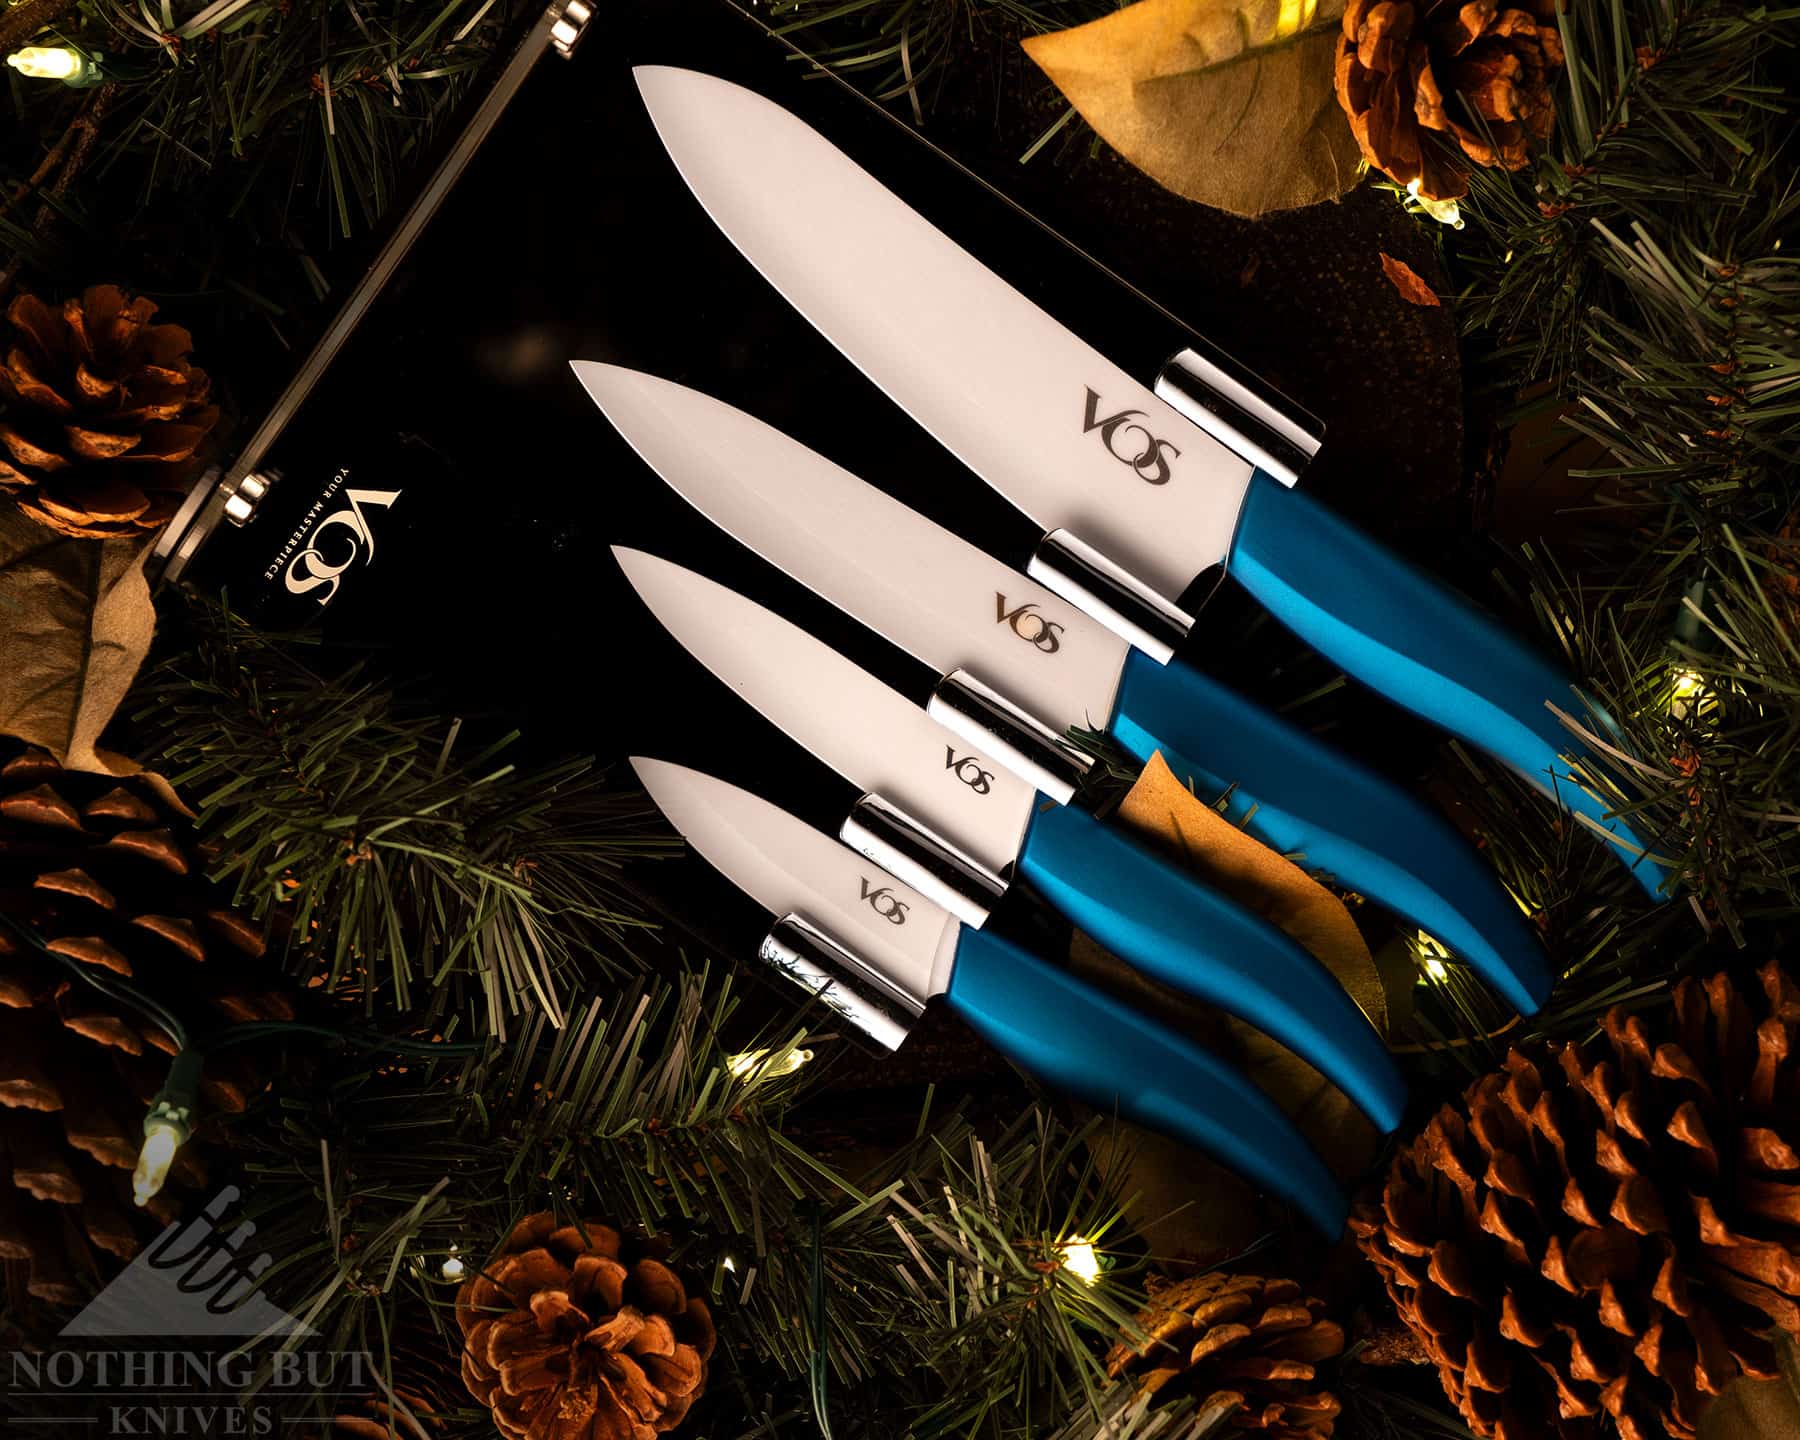 https://www.nothingbutknives.com/wp-content/uploads/2020/10/Best-Knife-Sets-for-Gifts.jpg